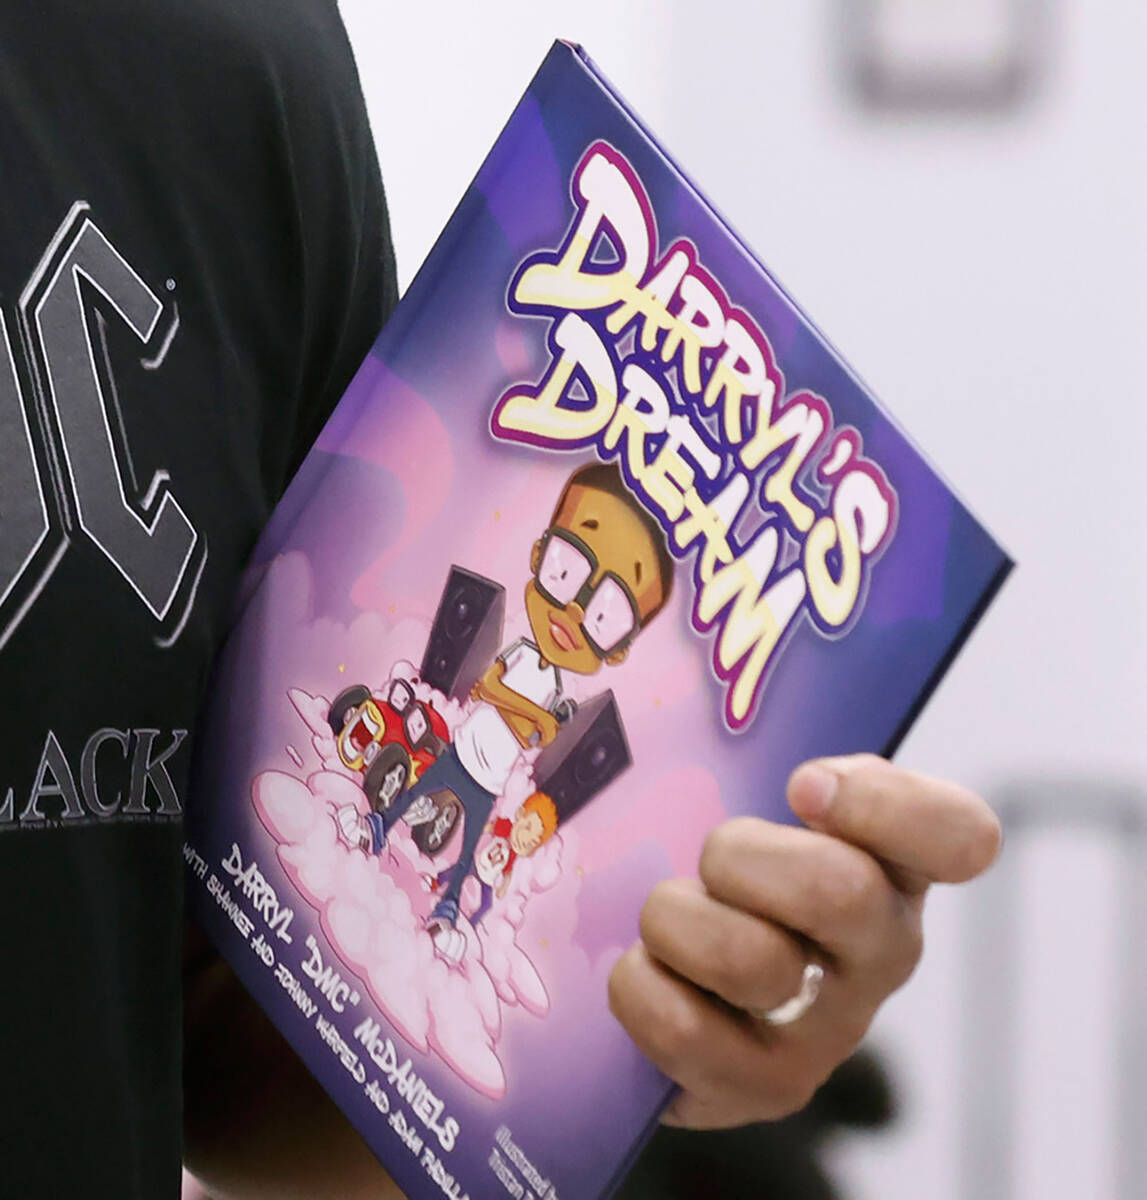 Grammy Award-winning rapper Darryl “DMC” McDaniels holds his new book, “Darryl’s Dream, ...